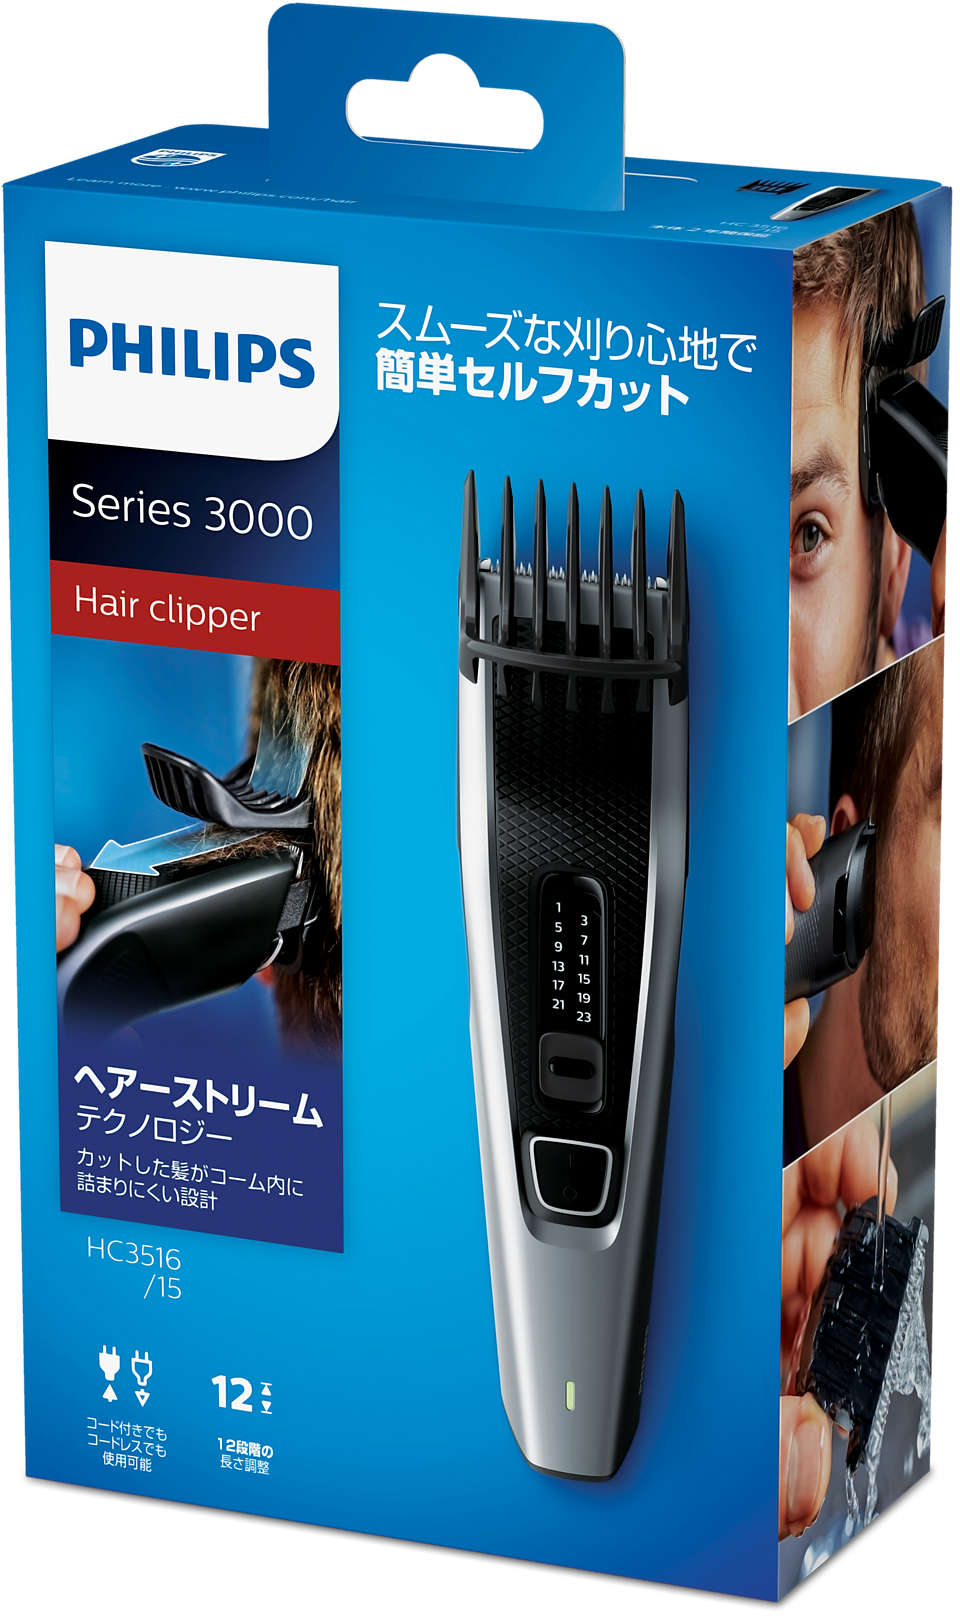 Hairclipper series 3000 ヘアーカッター HC3516/15 | Philips